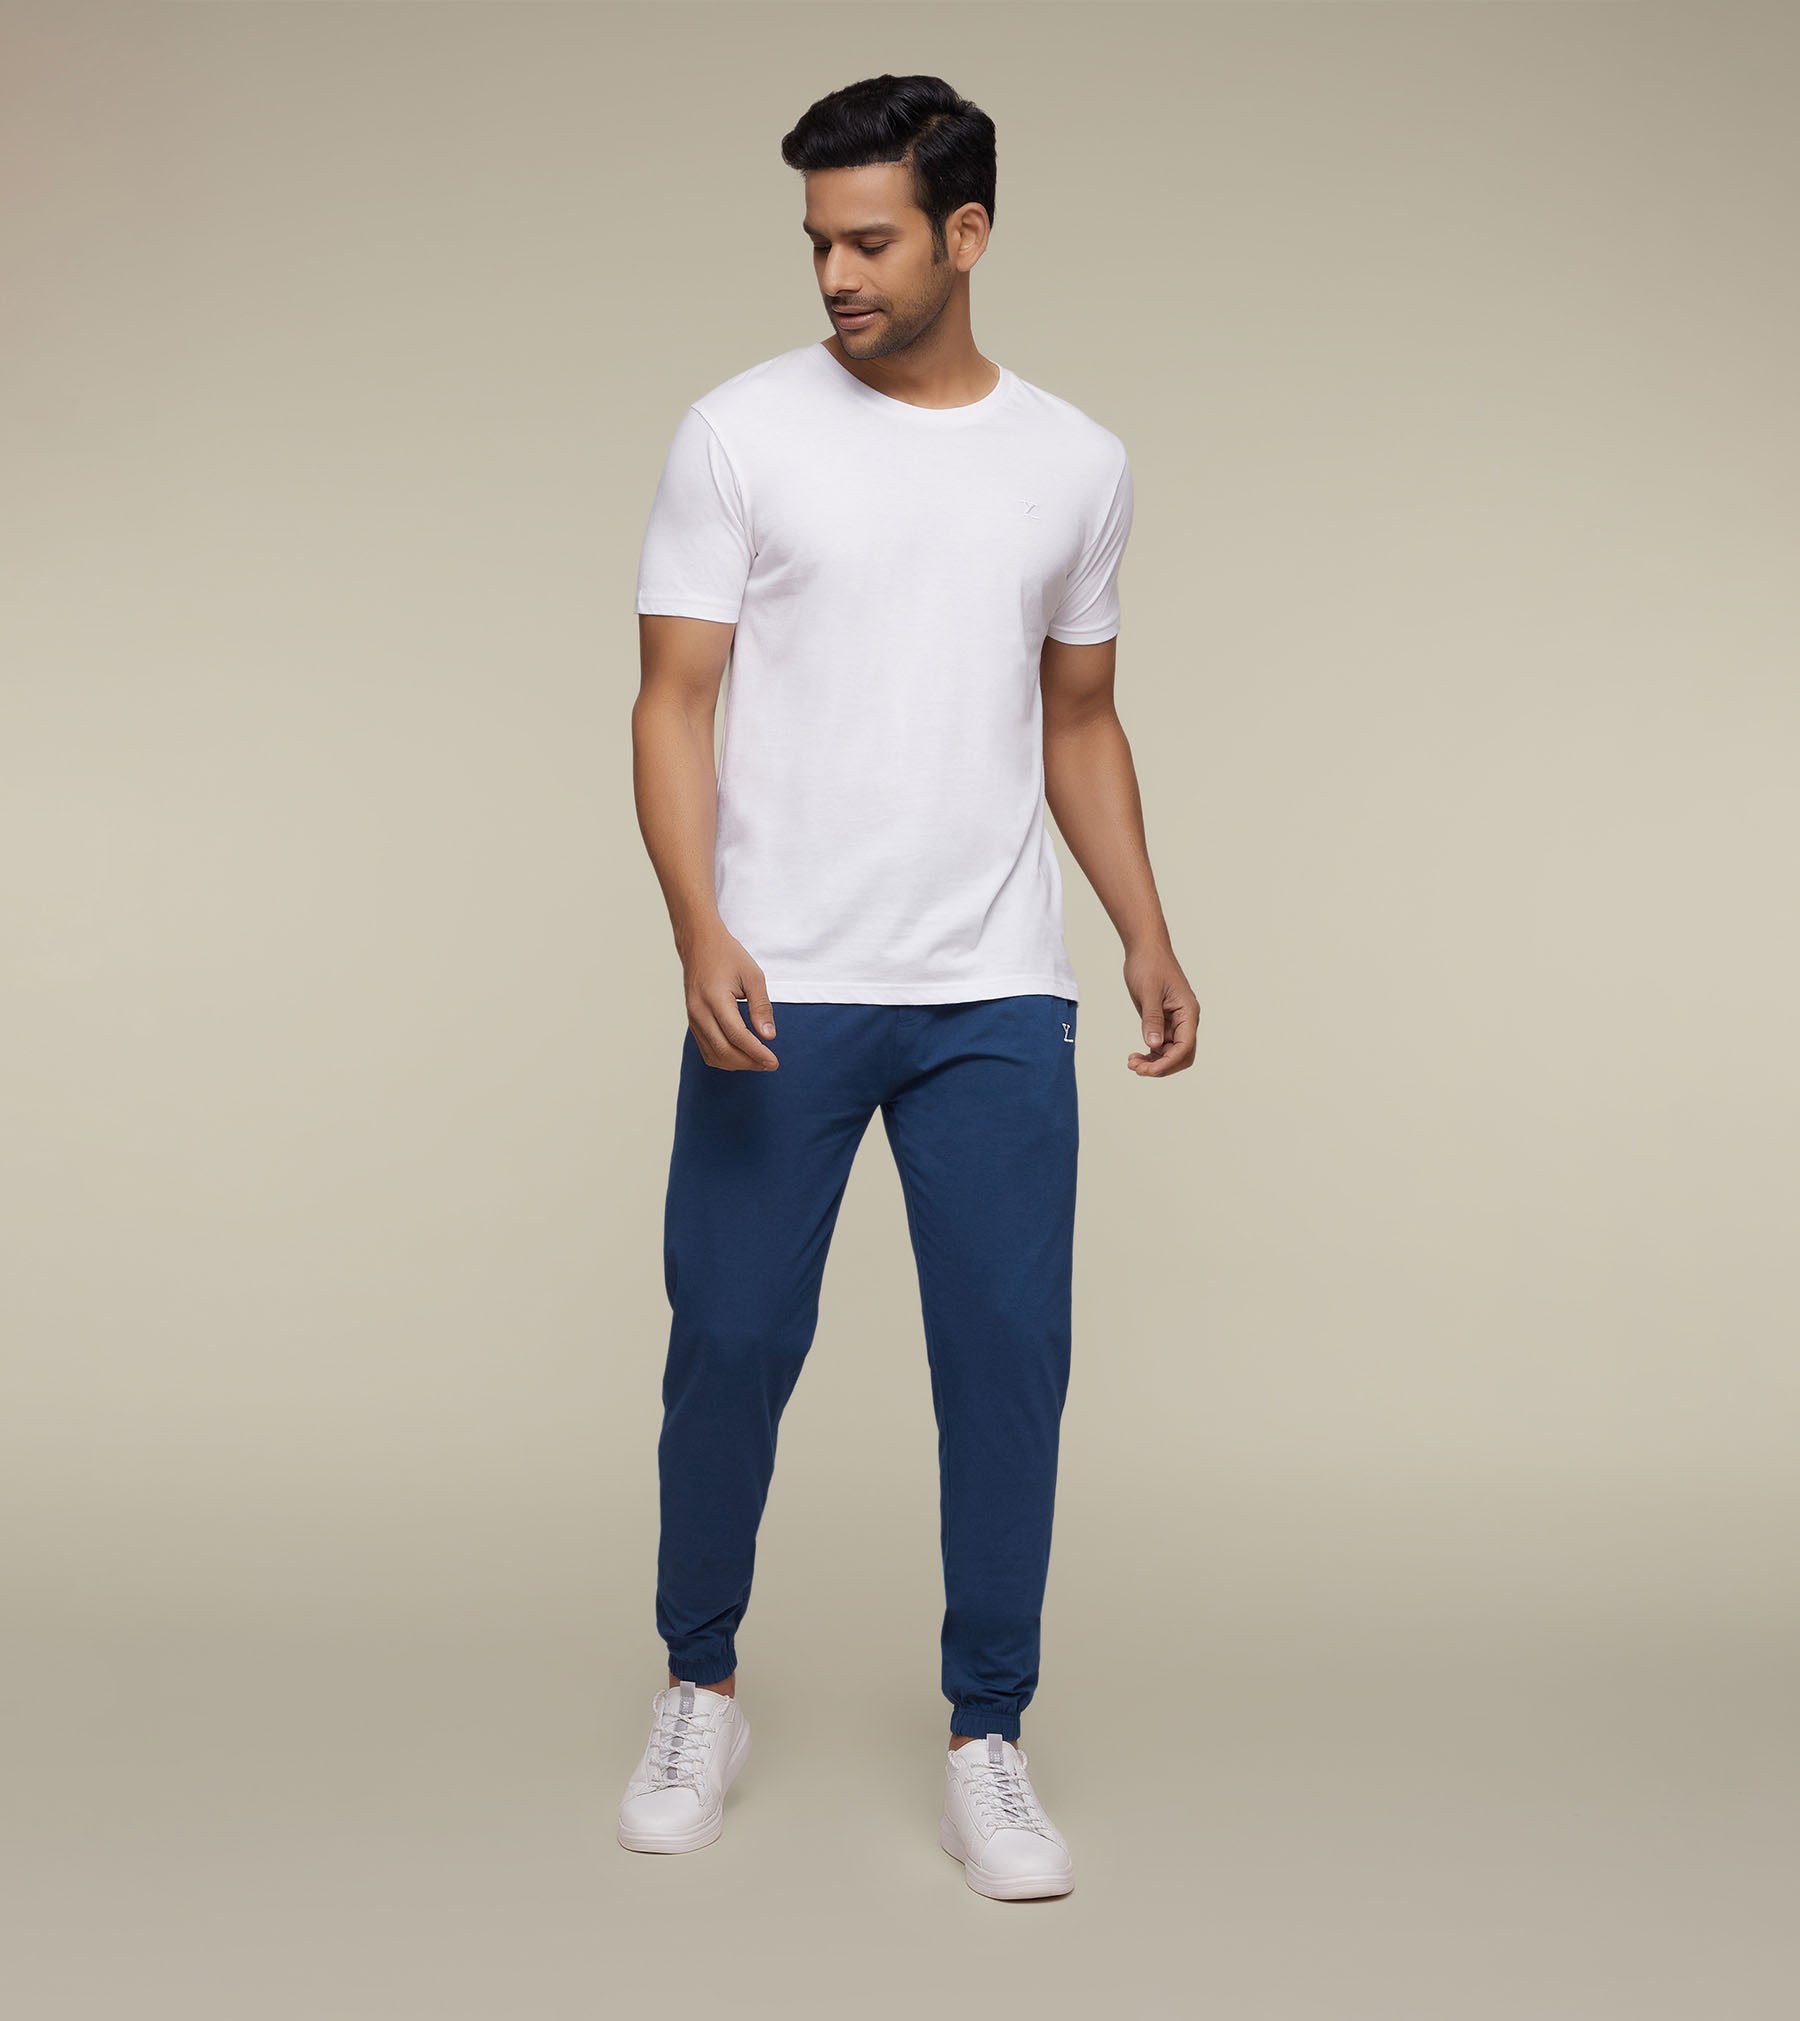 Ace Modal-Cotton Shorts Graphite Grey – XYXX Apparels